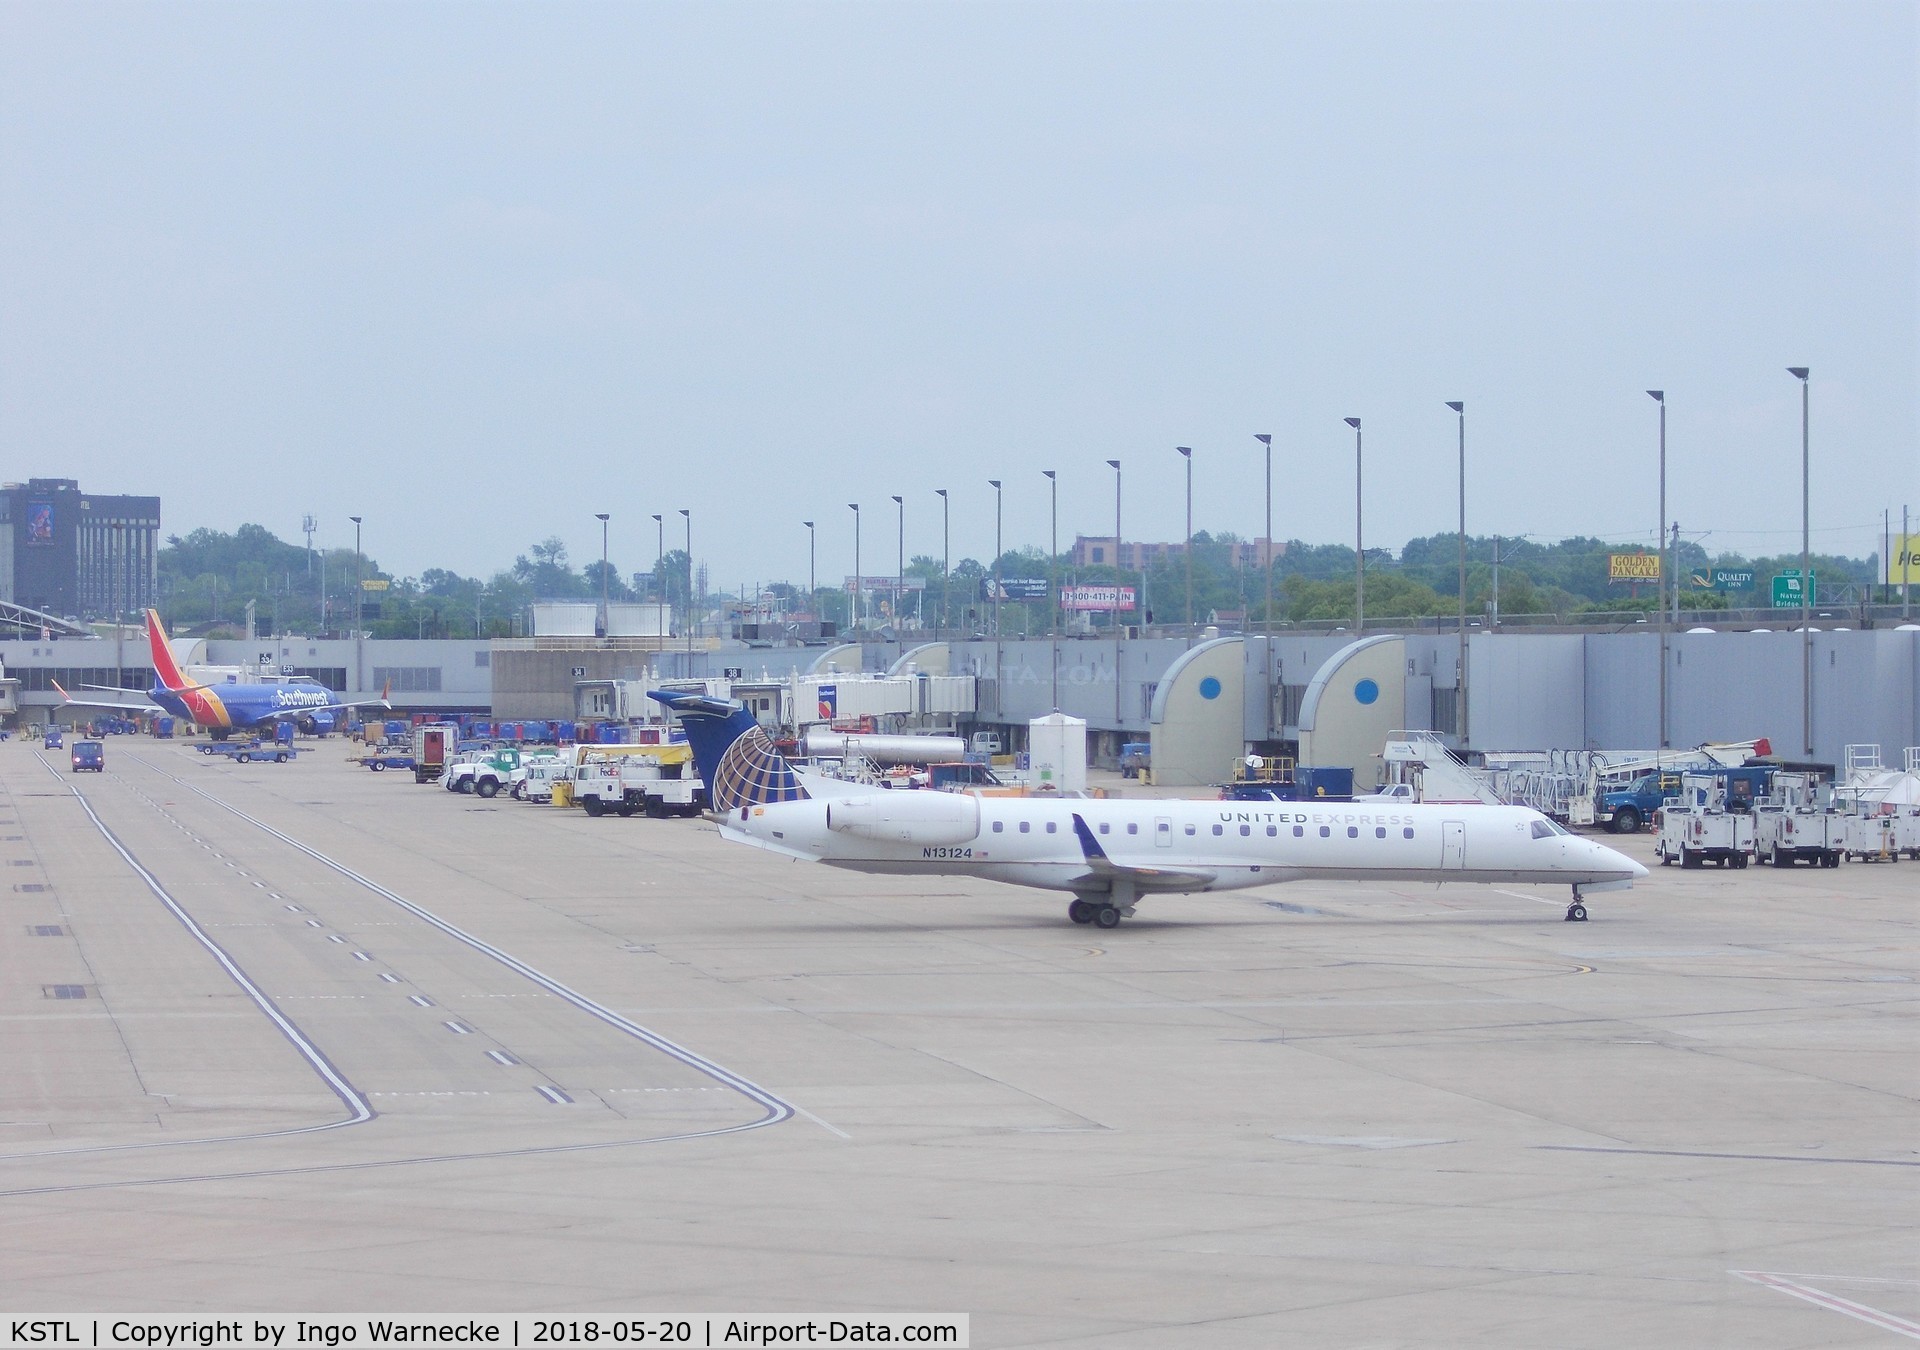 Lambert-st Louis International Airport (STL) - Lambert-St. Louis Intl. Airport, St. Louis MO